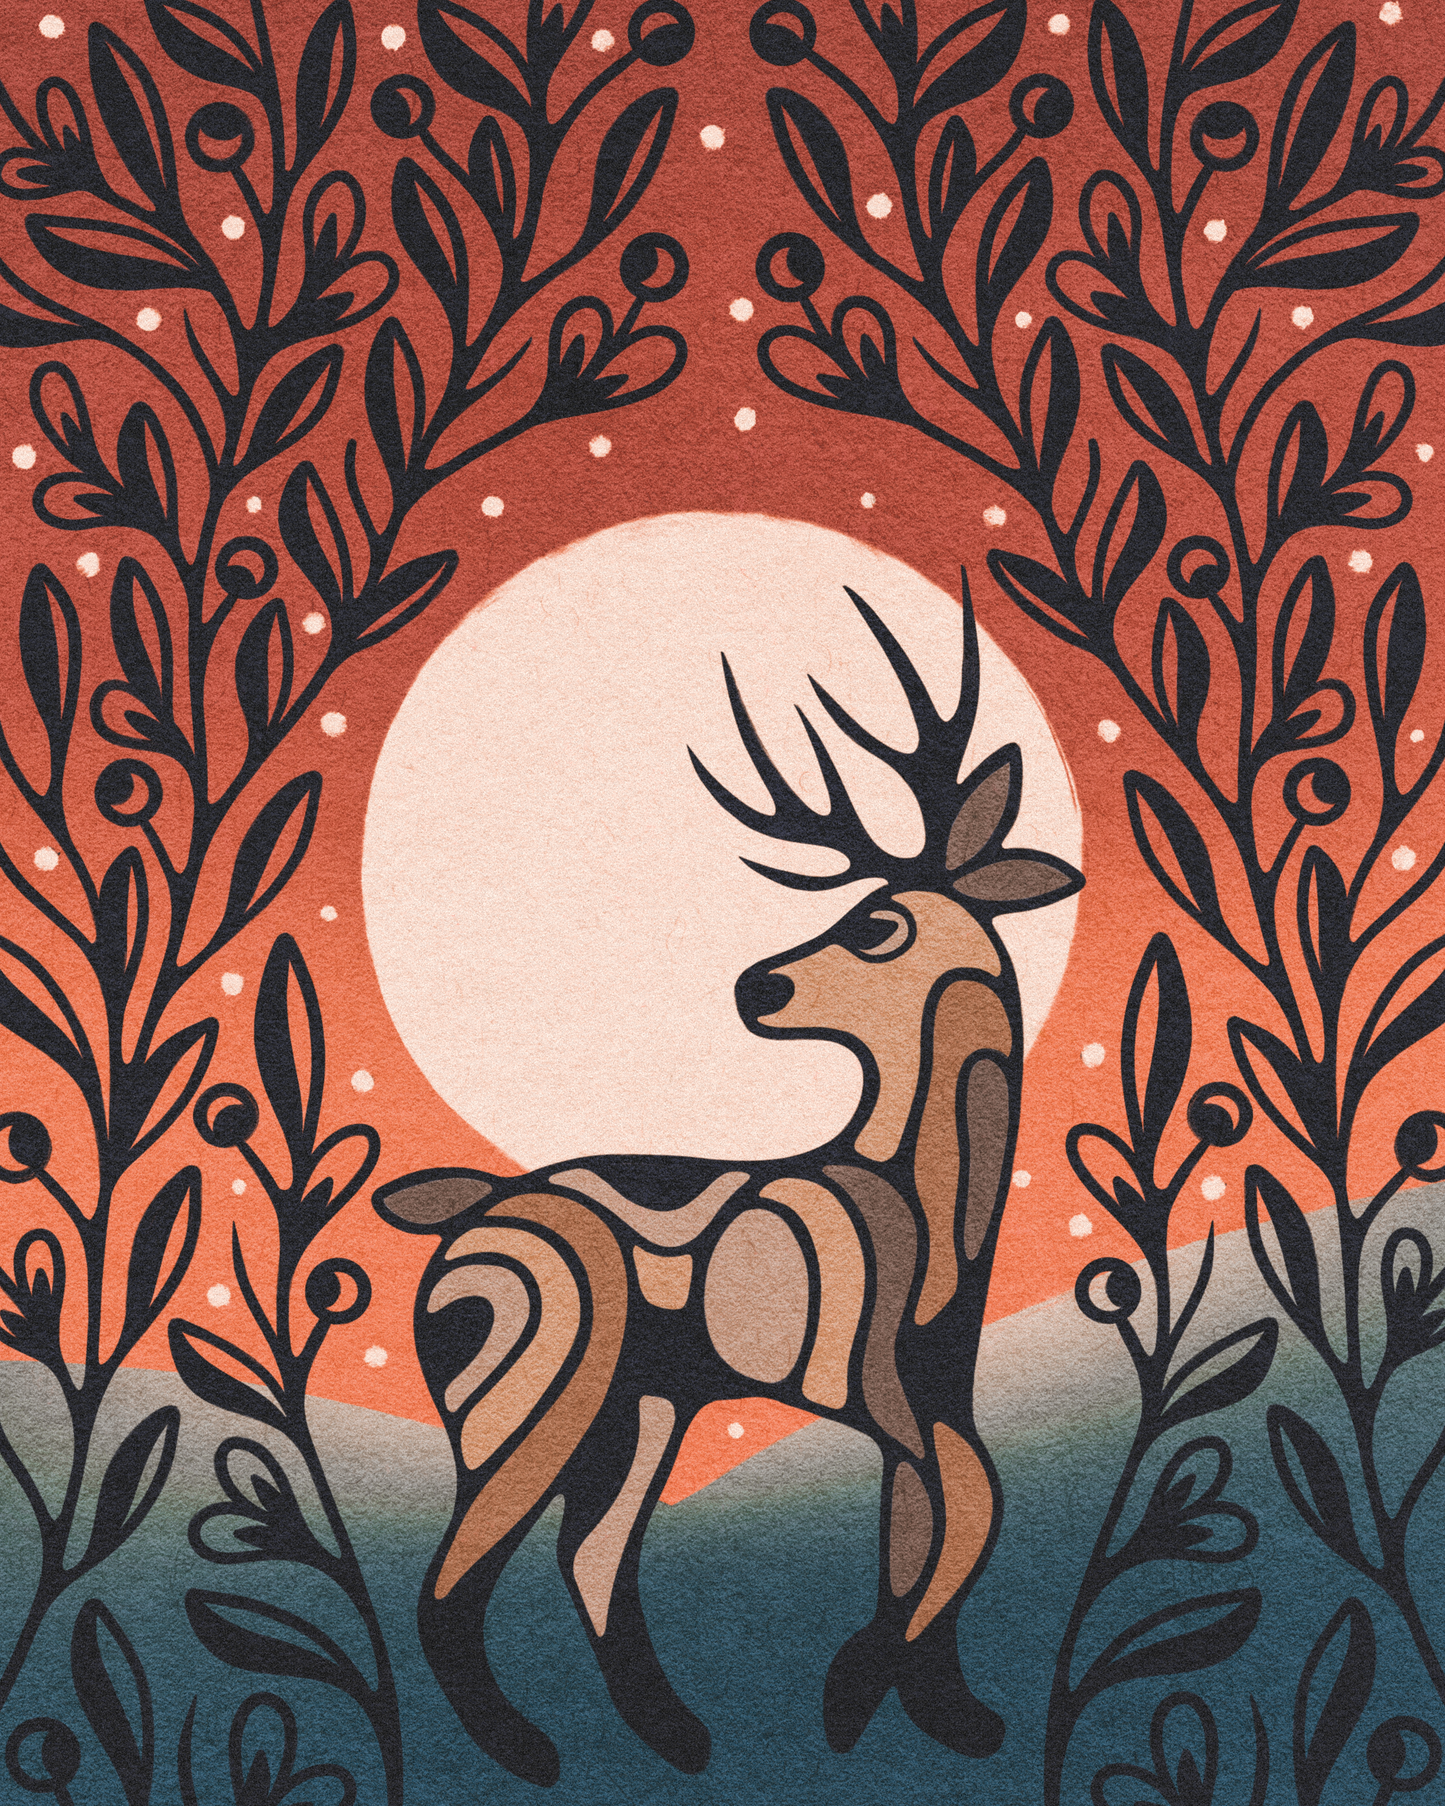 "Winter Rest" Series: Deer